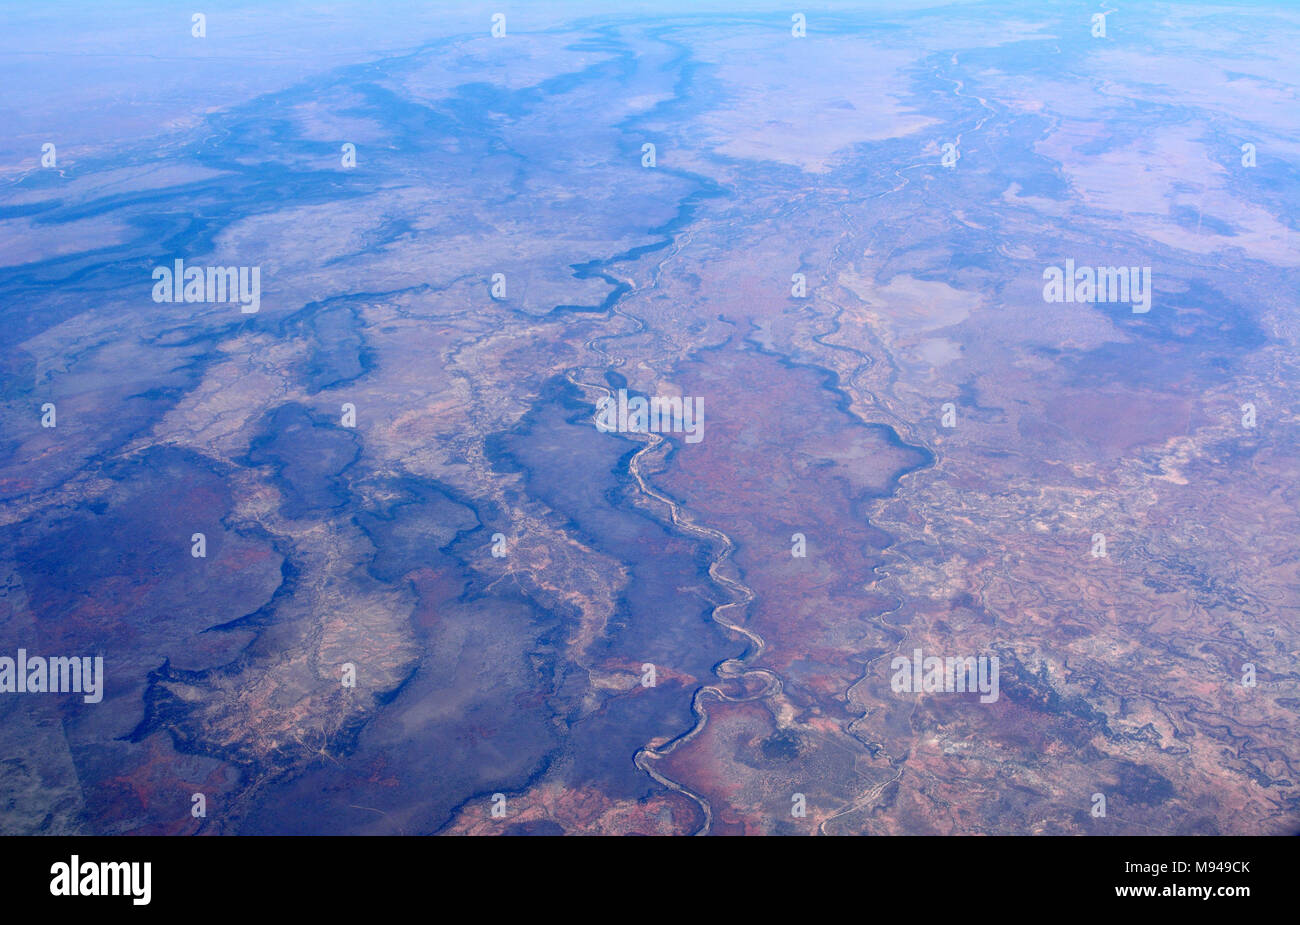 Aerial view of desert landscape in Australian outback. Stock Photo